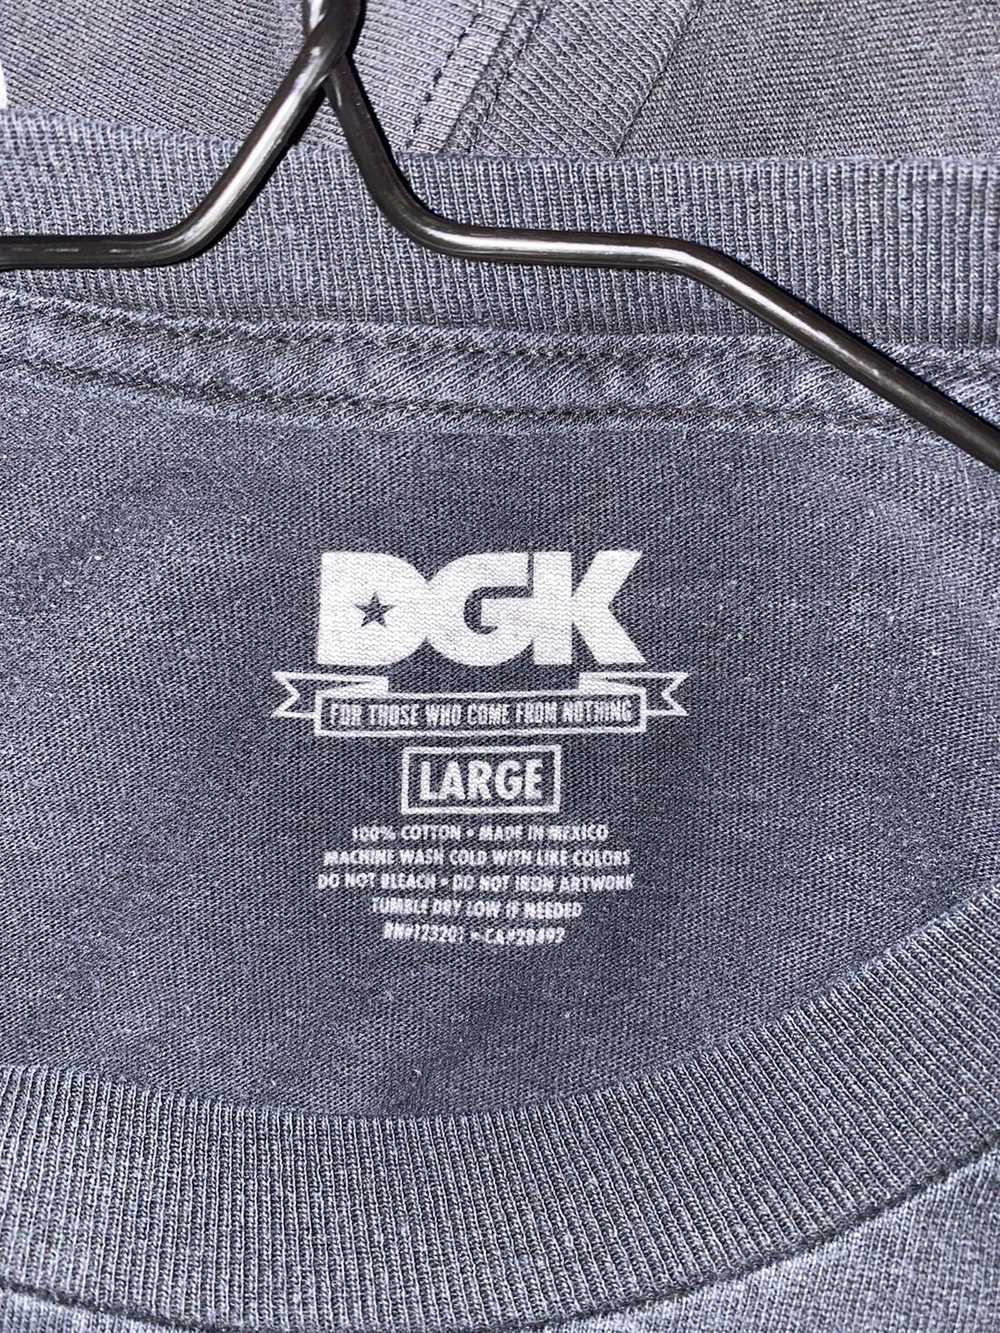 Dgk DGK - Money Over Hoes - image 3